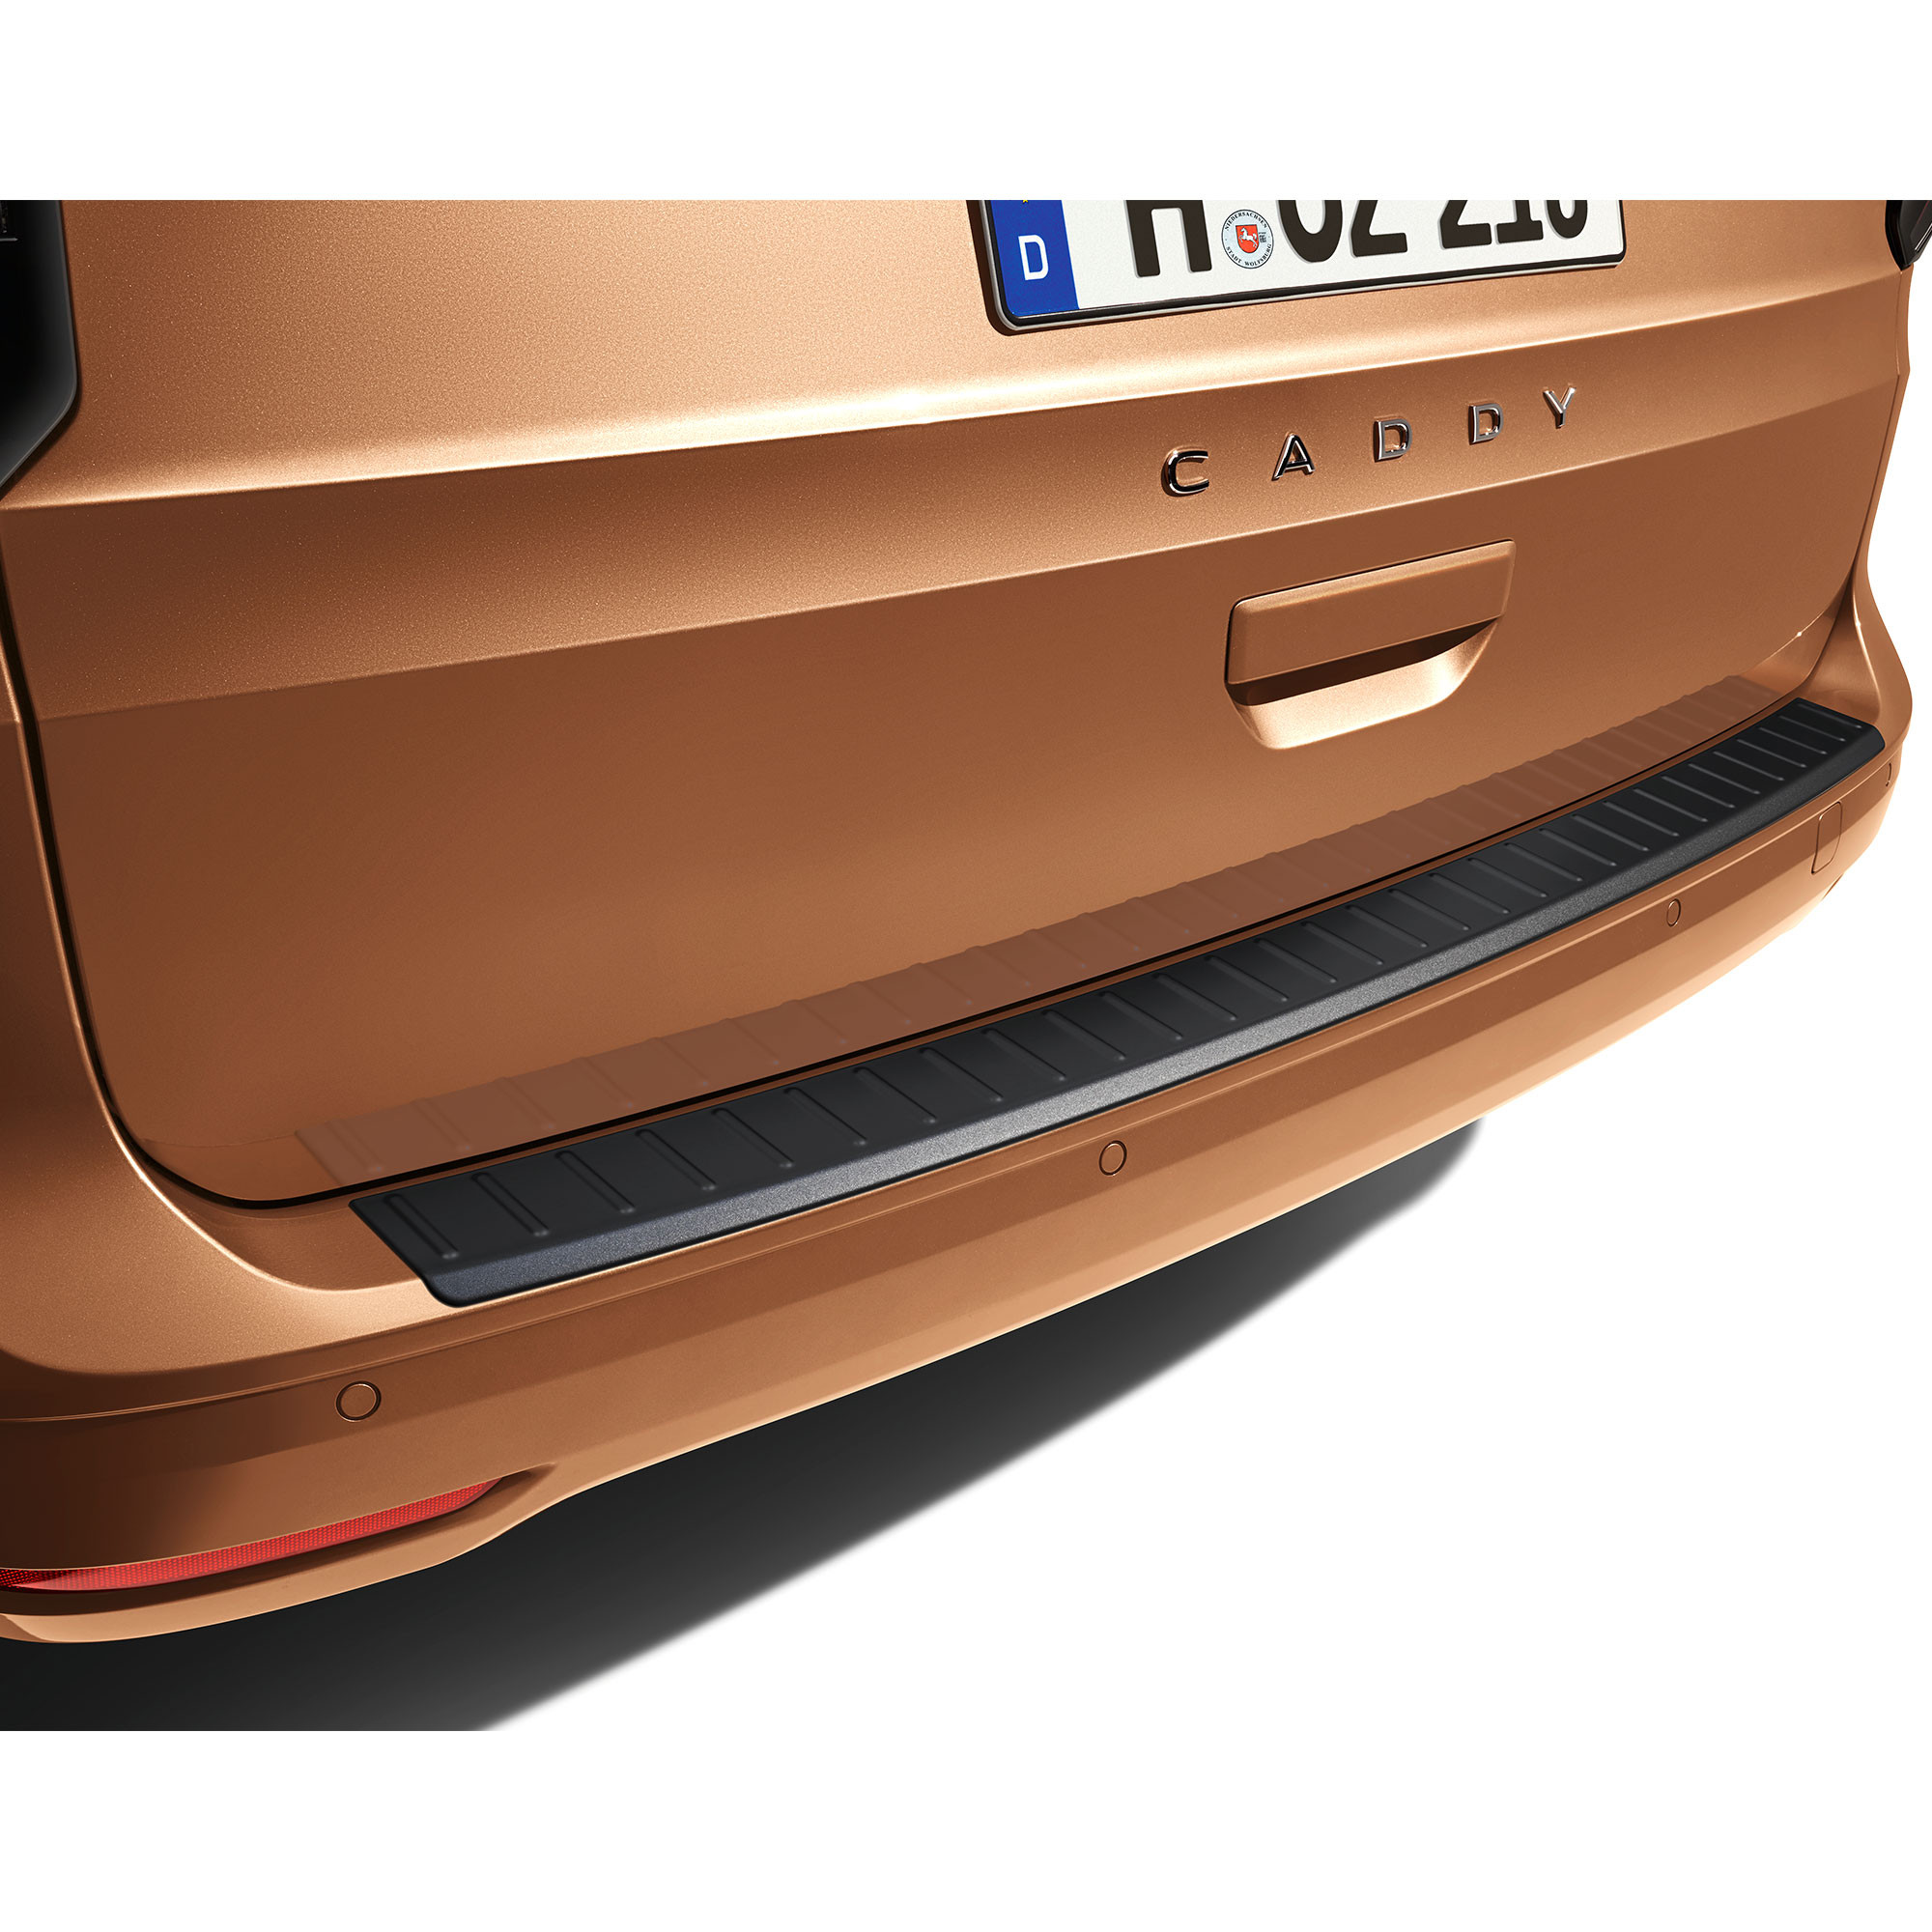 Kantenschutz VW - 135 x 90 mm - Farbe weiß